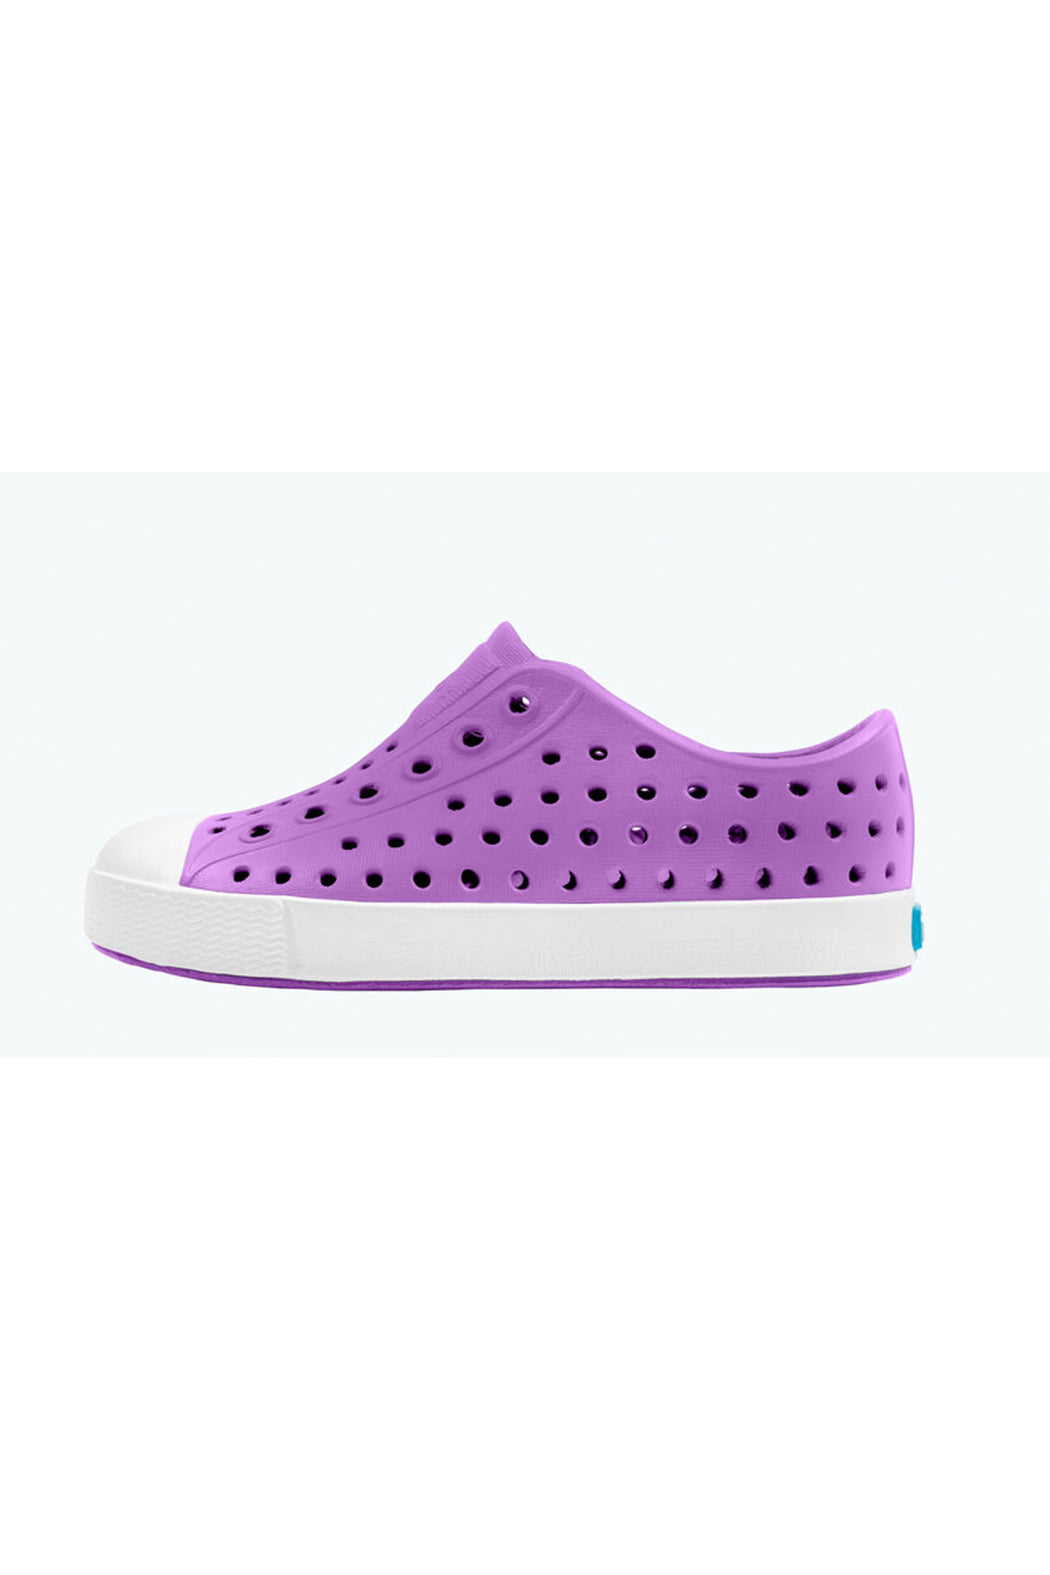 Native Jefferson Little Kid Shoes - Starfish Purple/Shell White